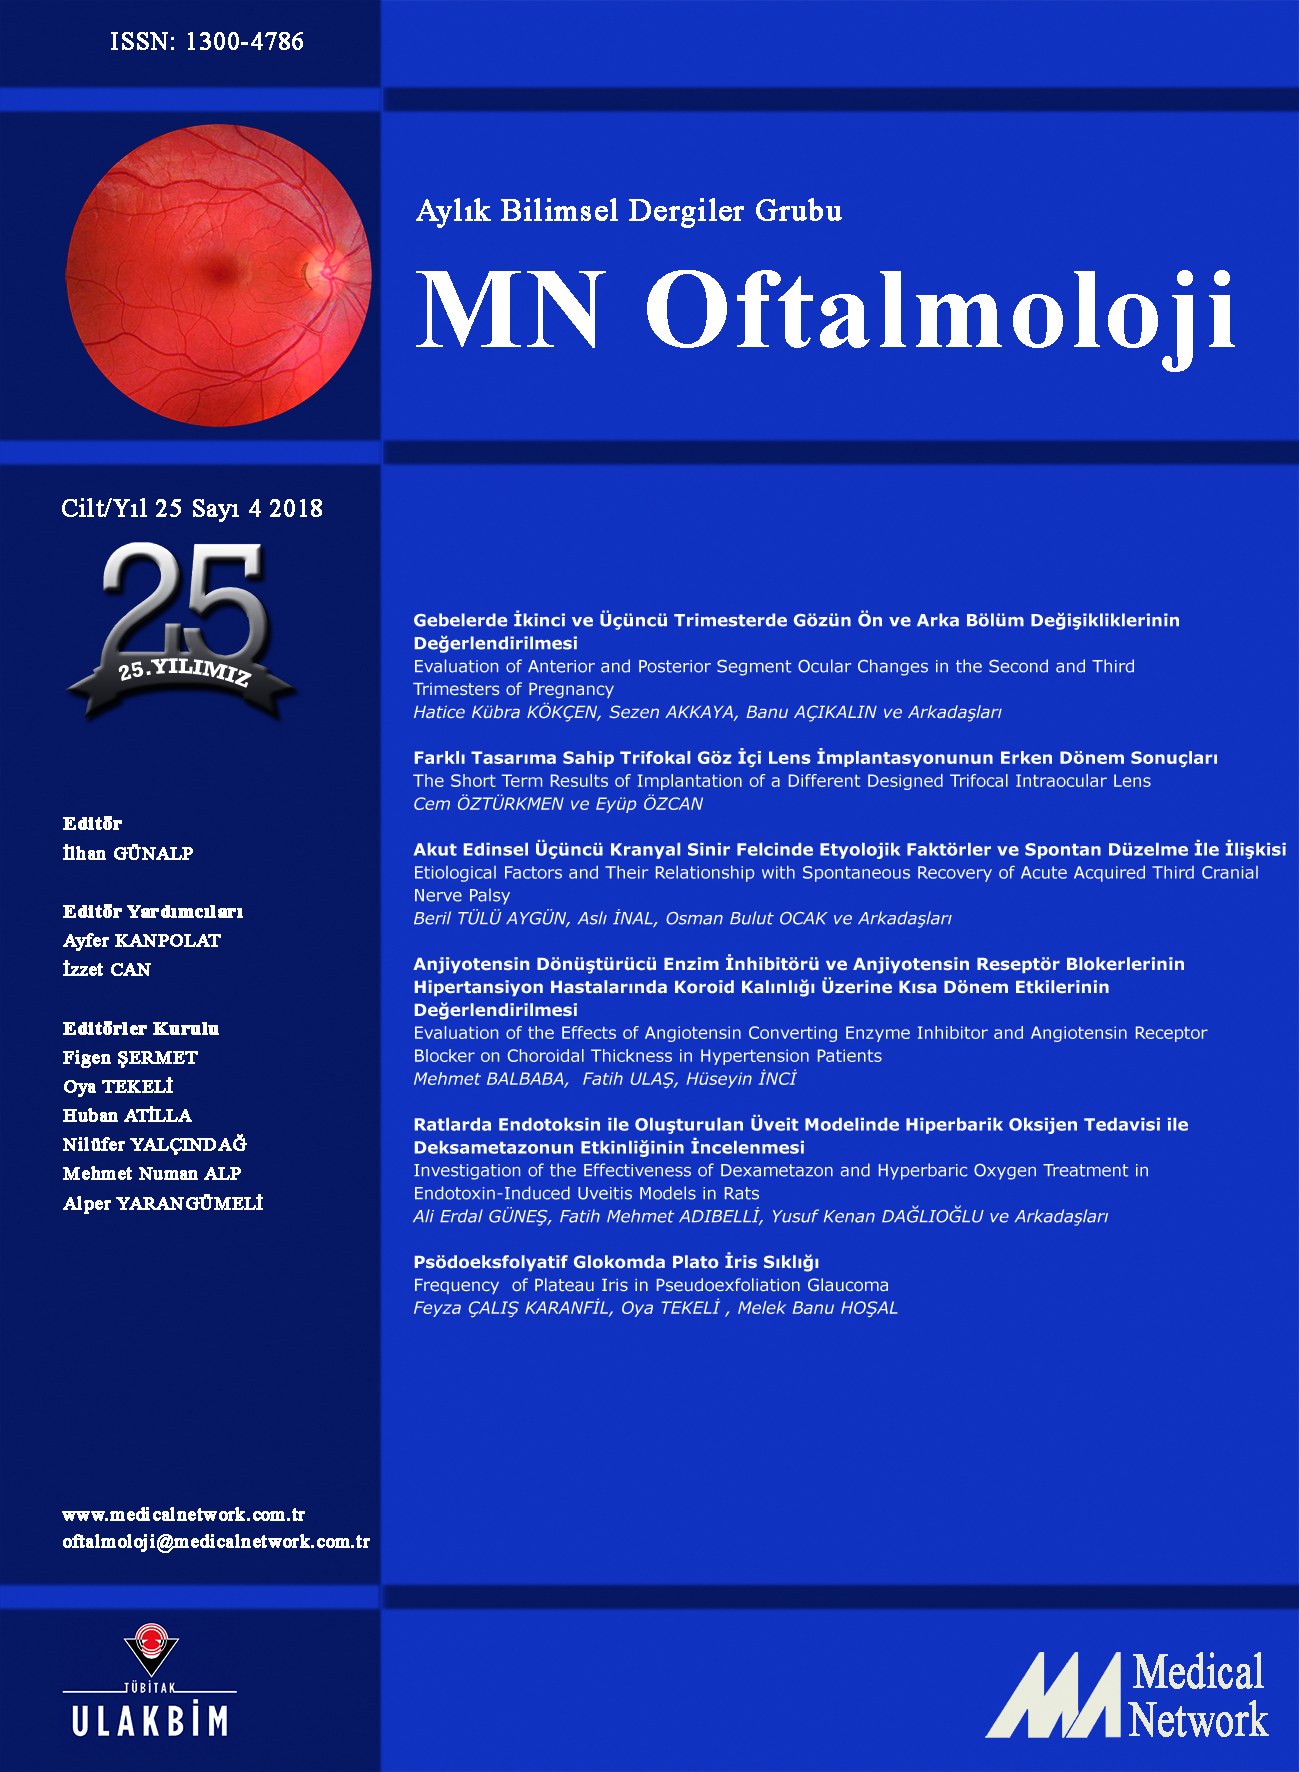 <div>MN Oftalmoloji Cilt: 25 Sayı: 4 2018 (MN Ophthalmology Volume: 25 No 4 2018)</div>